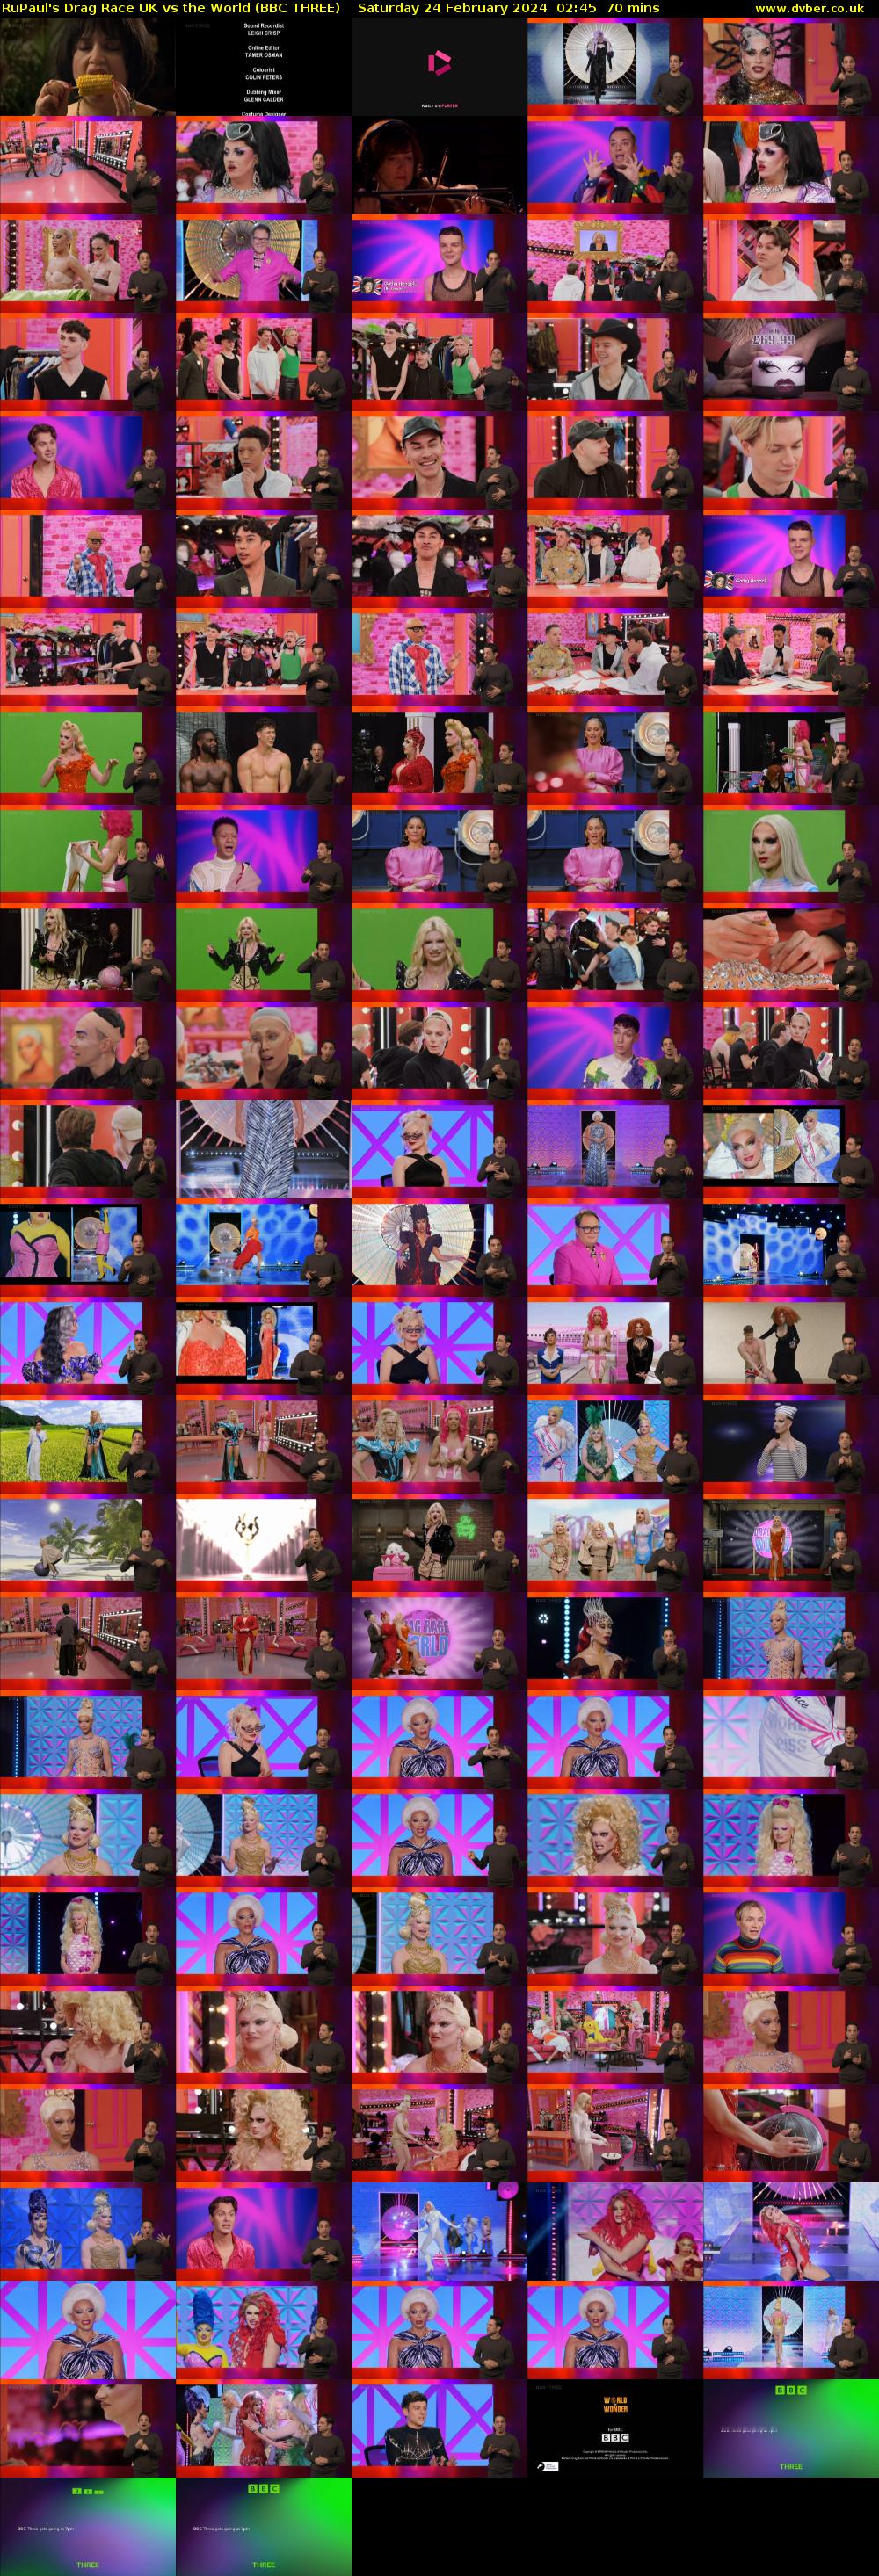 RuPaul's Drag Race UK vs The World (BBC THREE) Saturday 24 February 2024 02:45 - 03:55